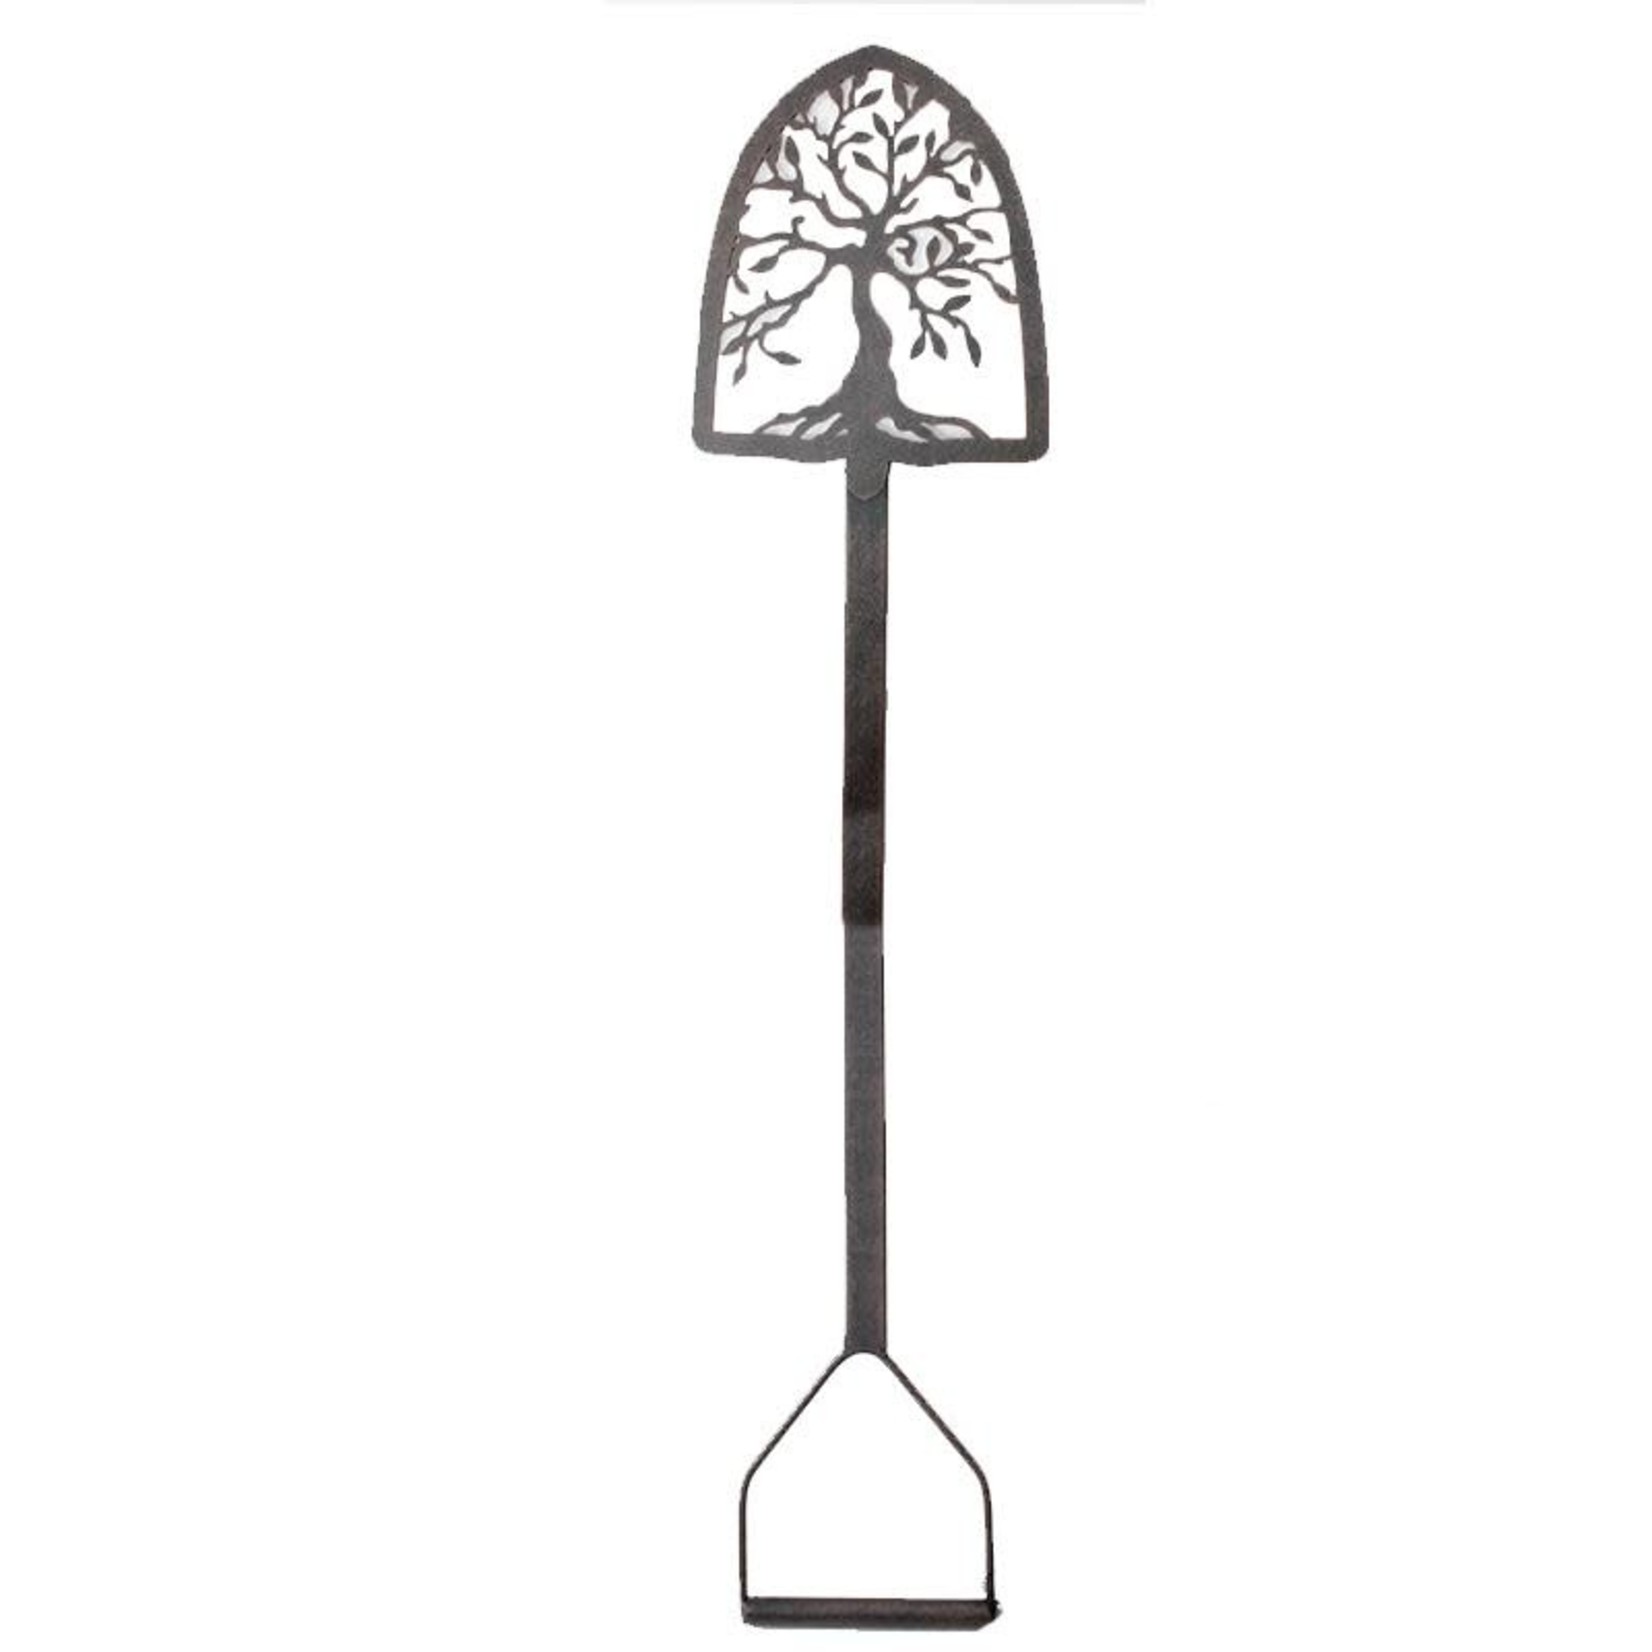 Koppers Tree of Life Wall Shovel